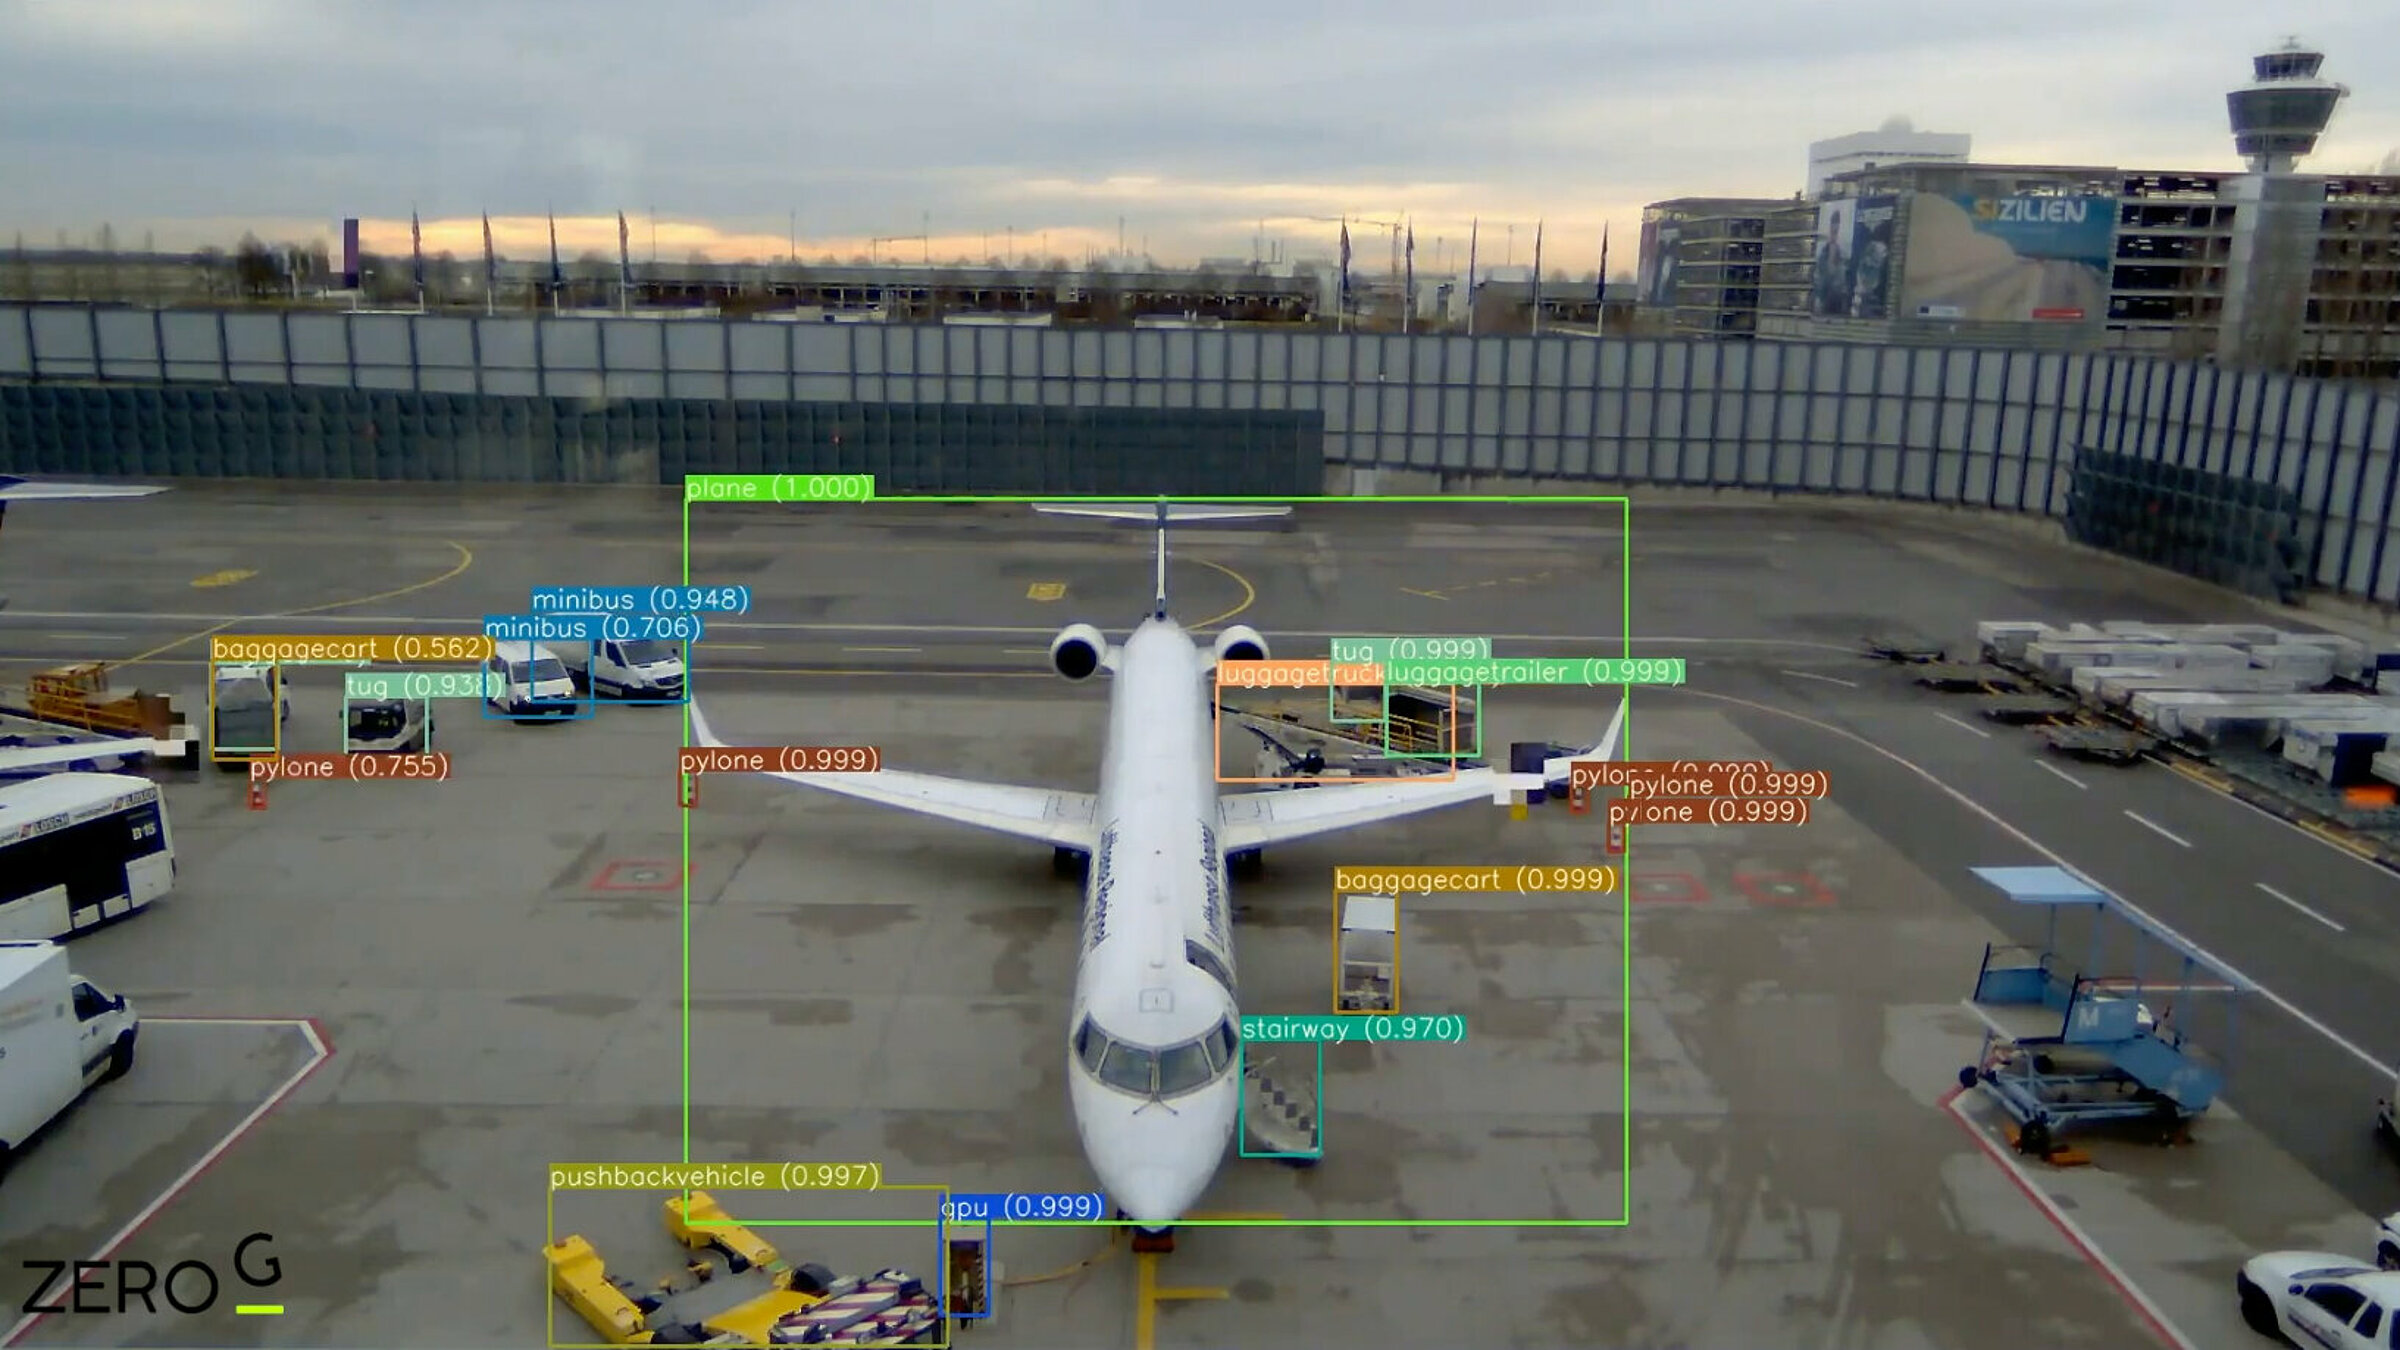 DeepTurnaround - Lufthansa Group Innovation Runway